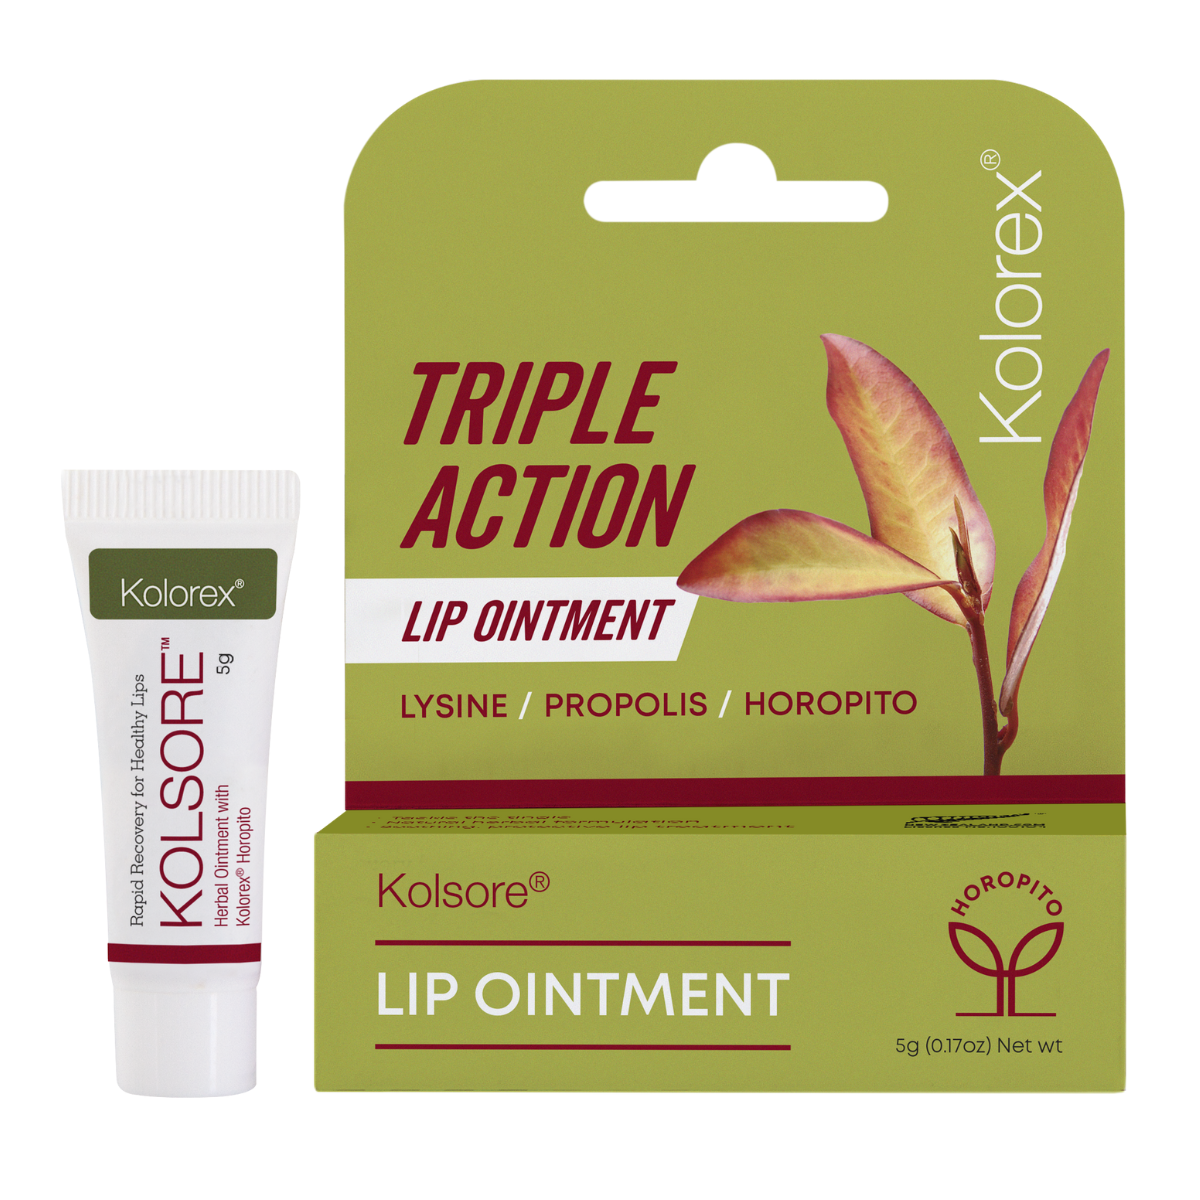 Kolorex Triple Action Lip Ointment